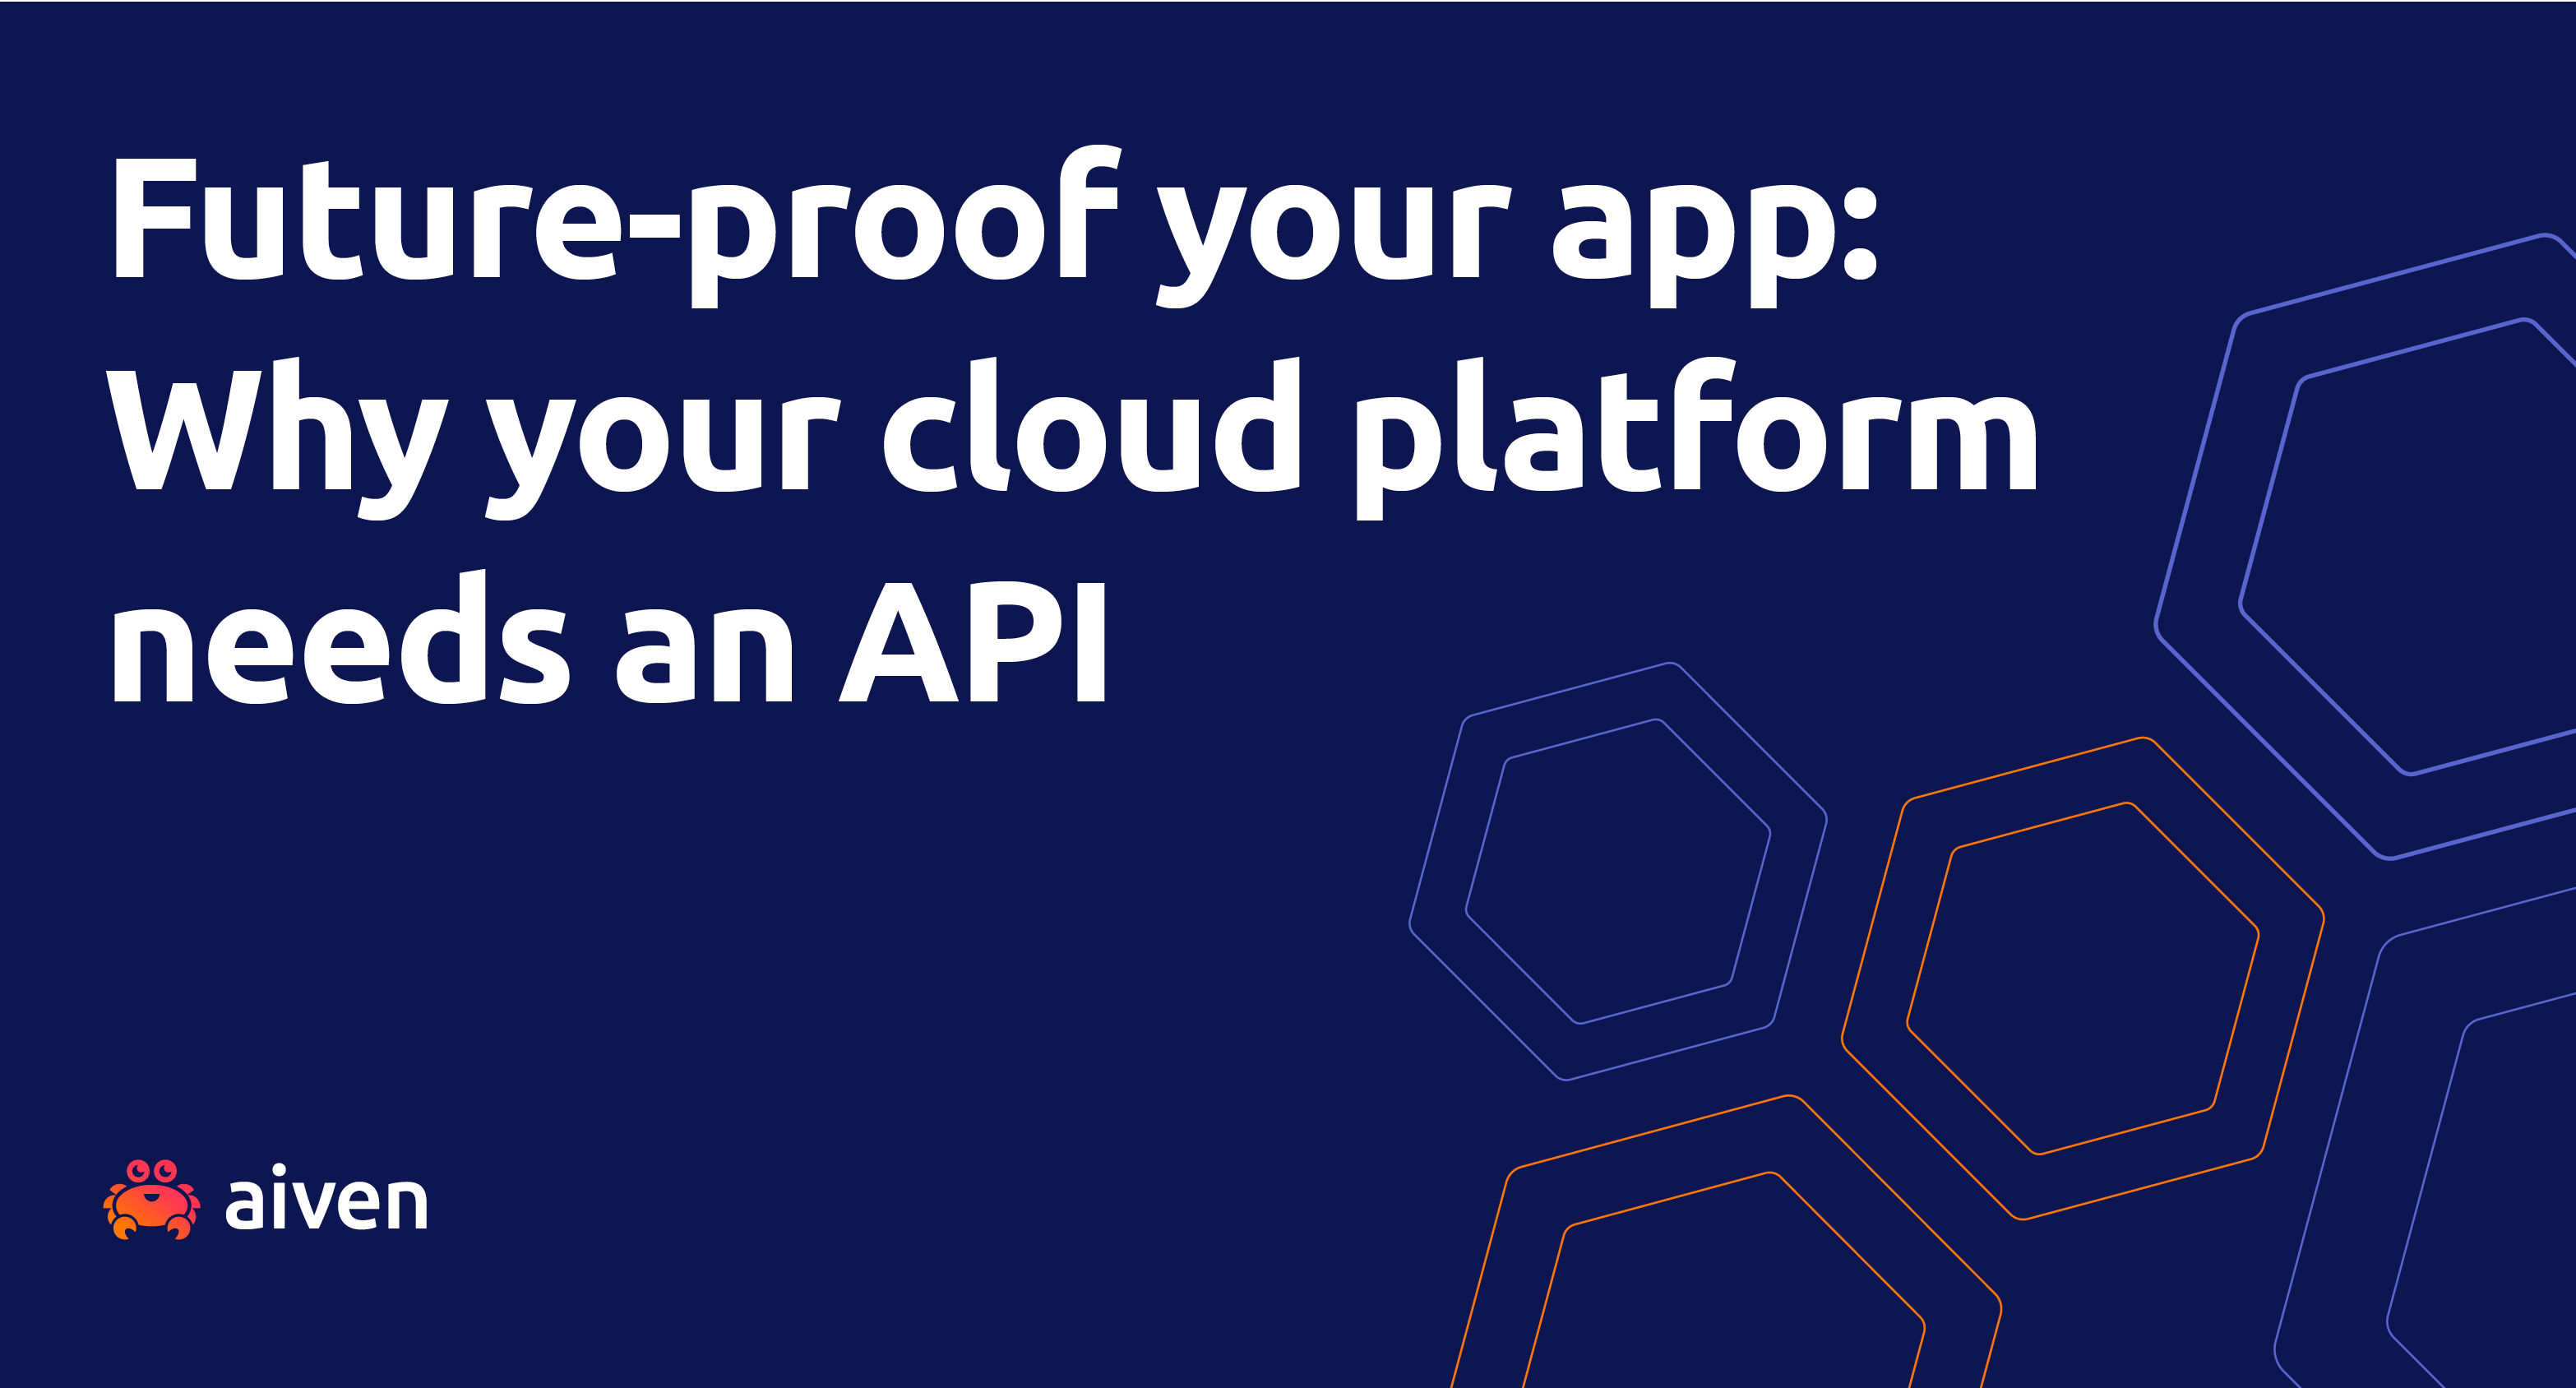 Your cloud platform isn't future-proof without an API illustration